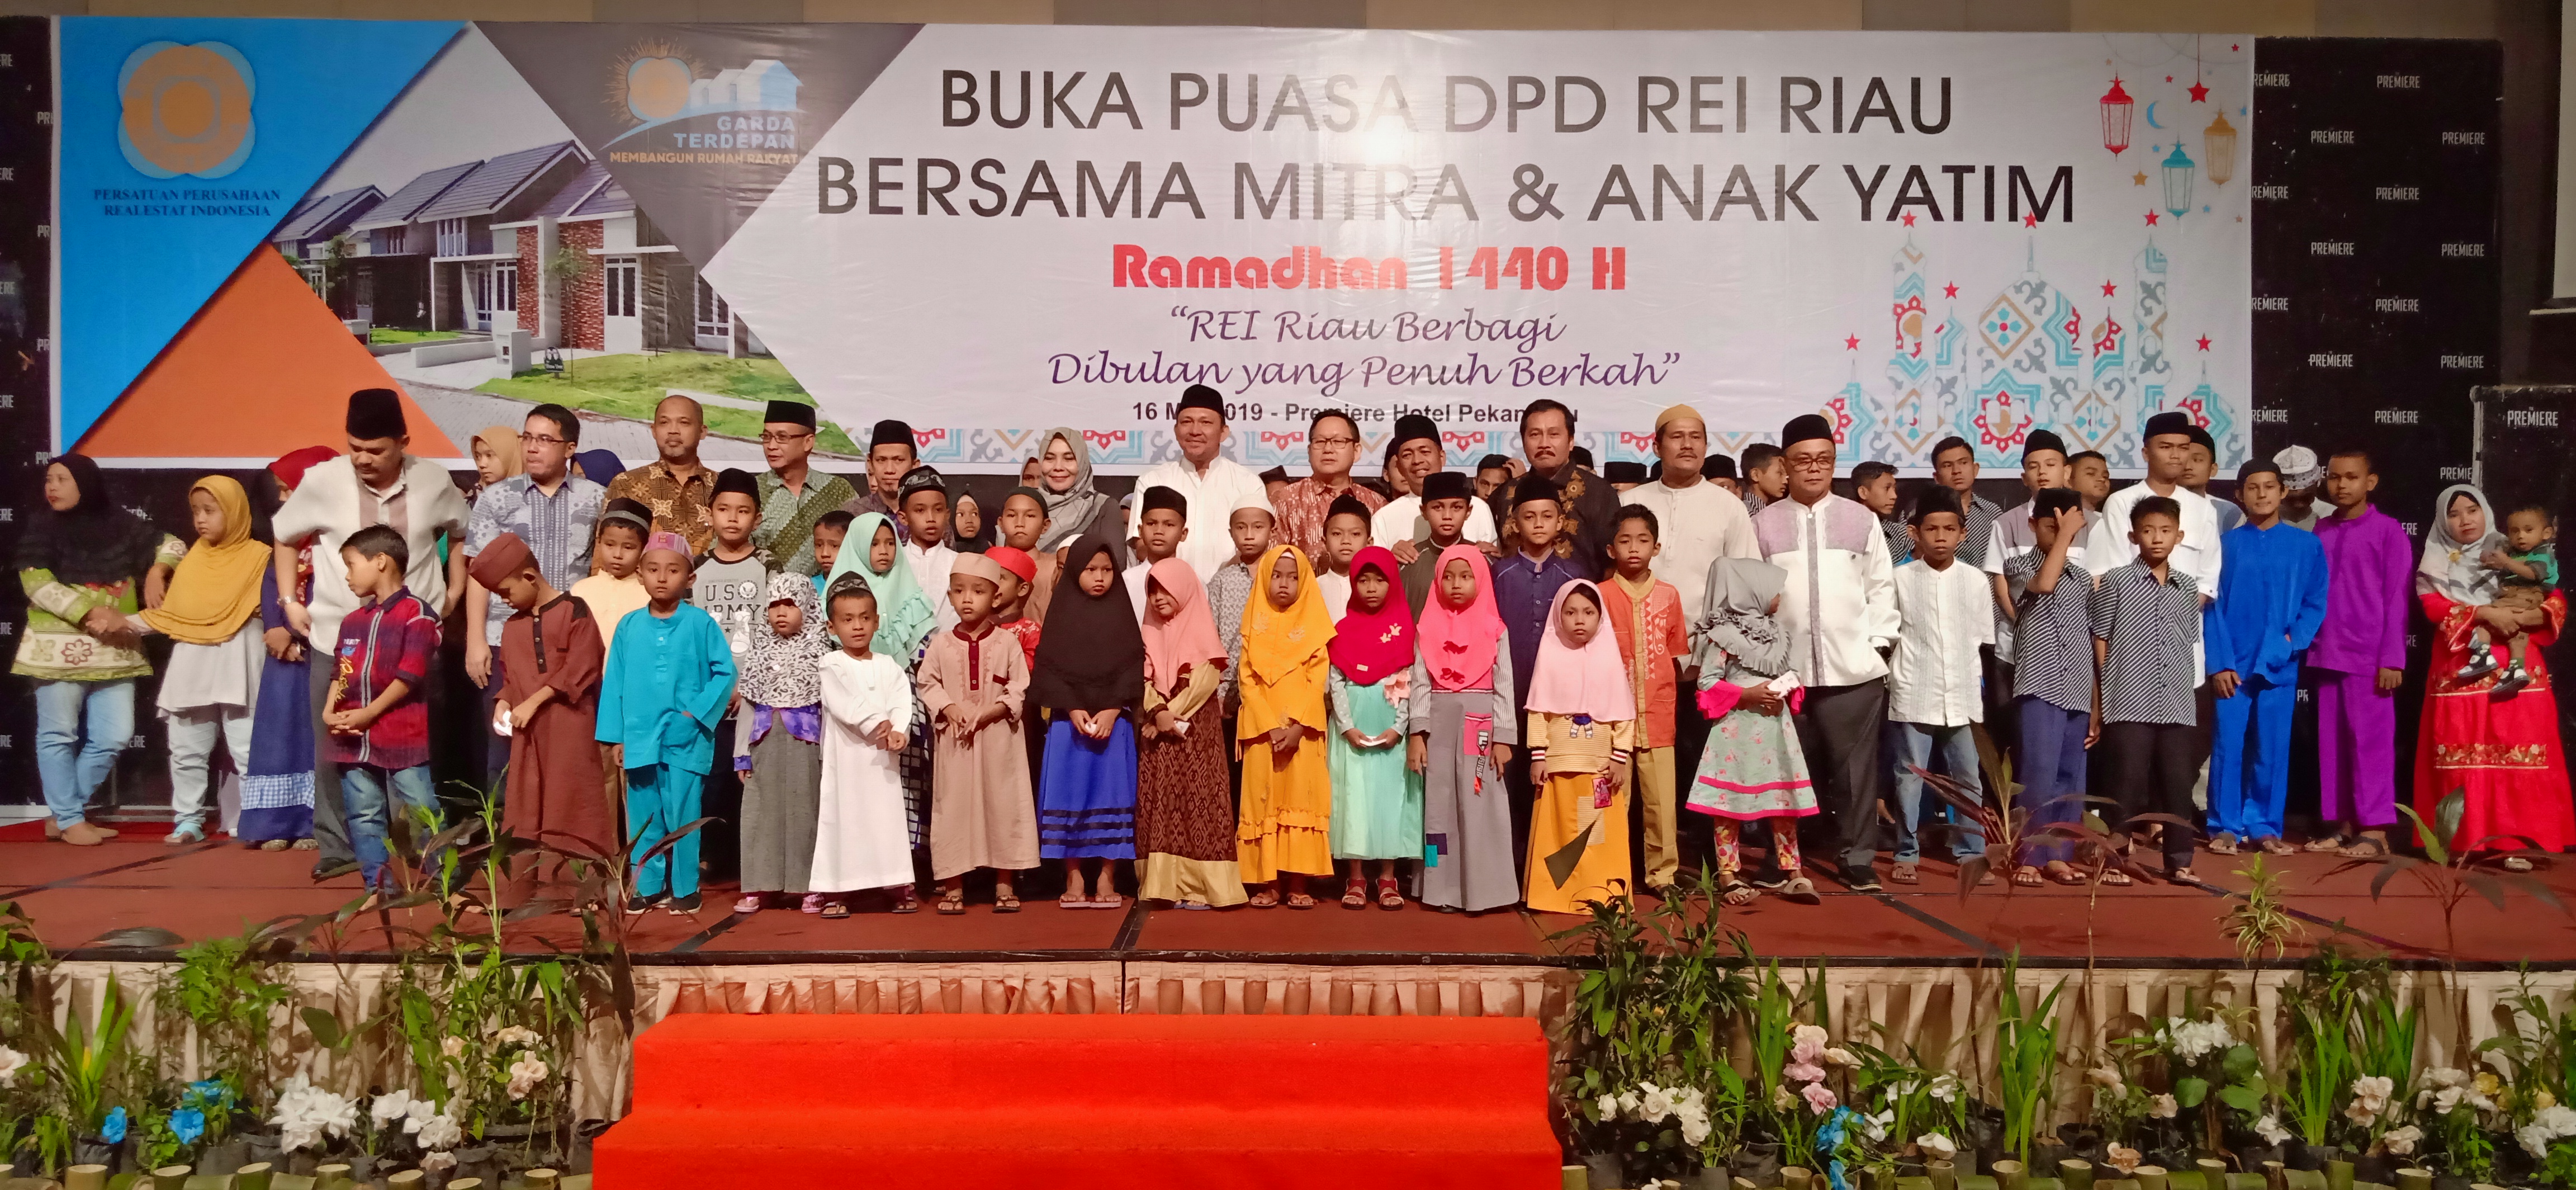 DPD REI Riau Muliakan 80 Anak Yatim, Ternyata Begini Caranya